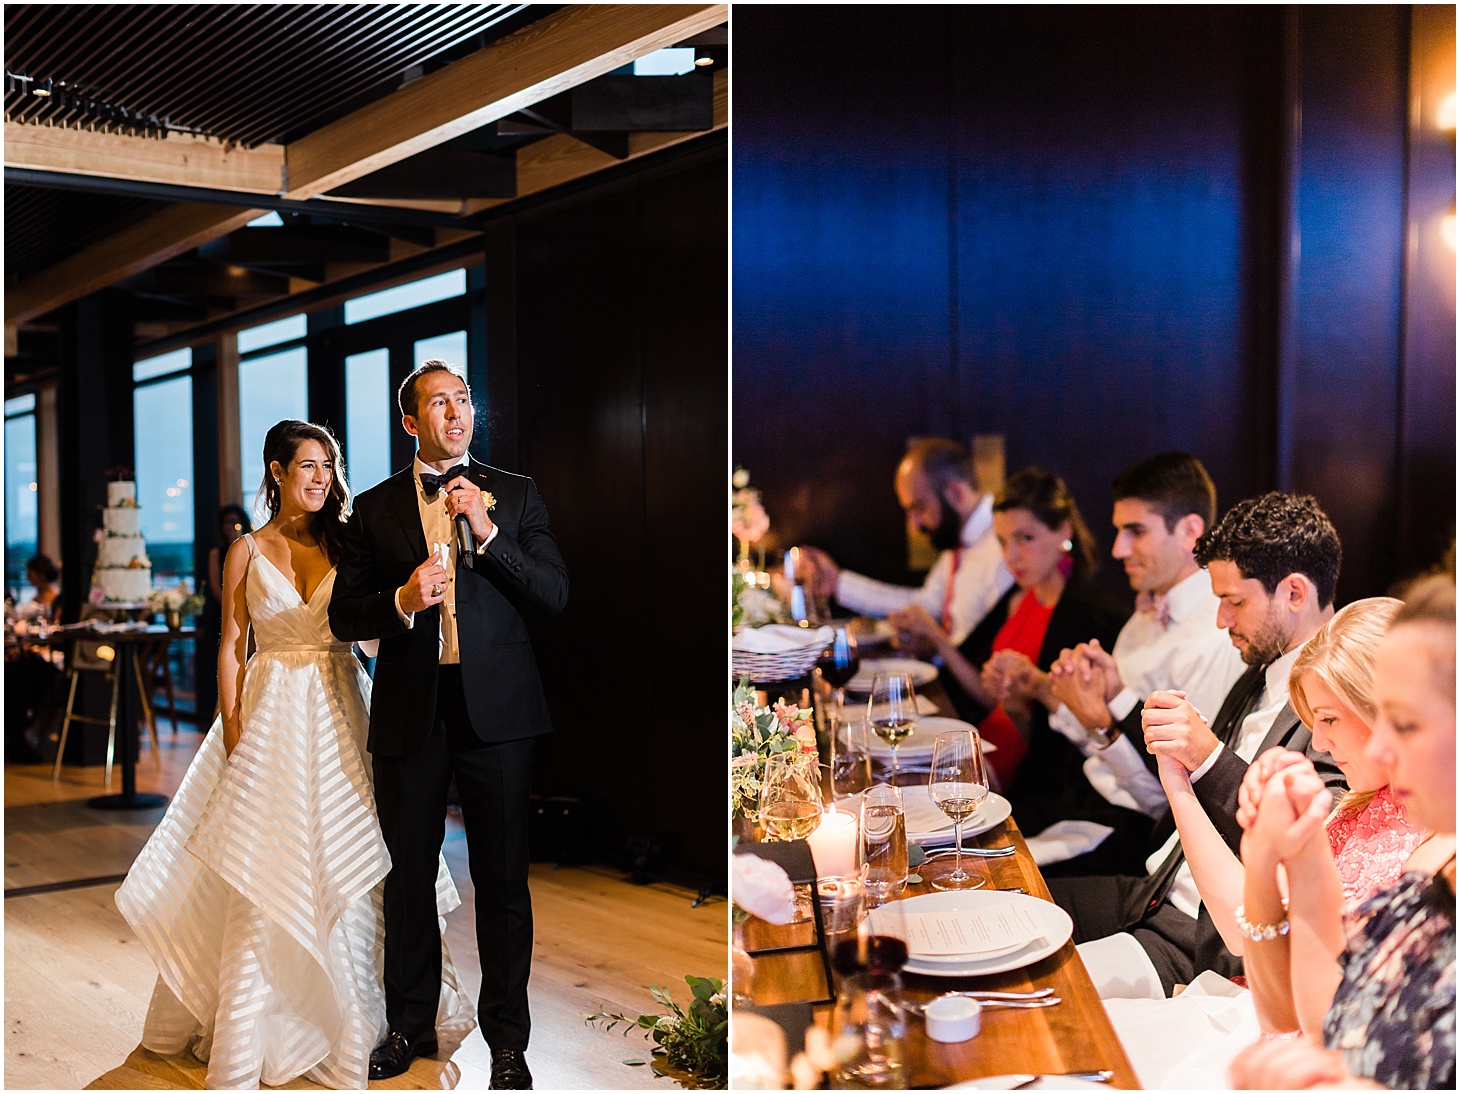 Wedding Reception at District Winery | Chic and Modern Interfaith Wedding in Washington, DC | Sarah Bradshaw Photography